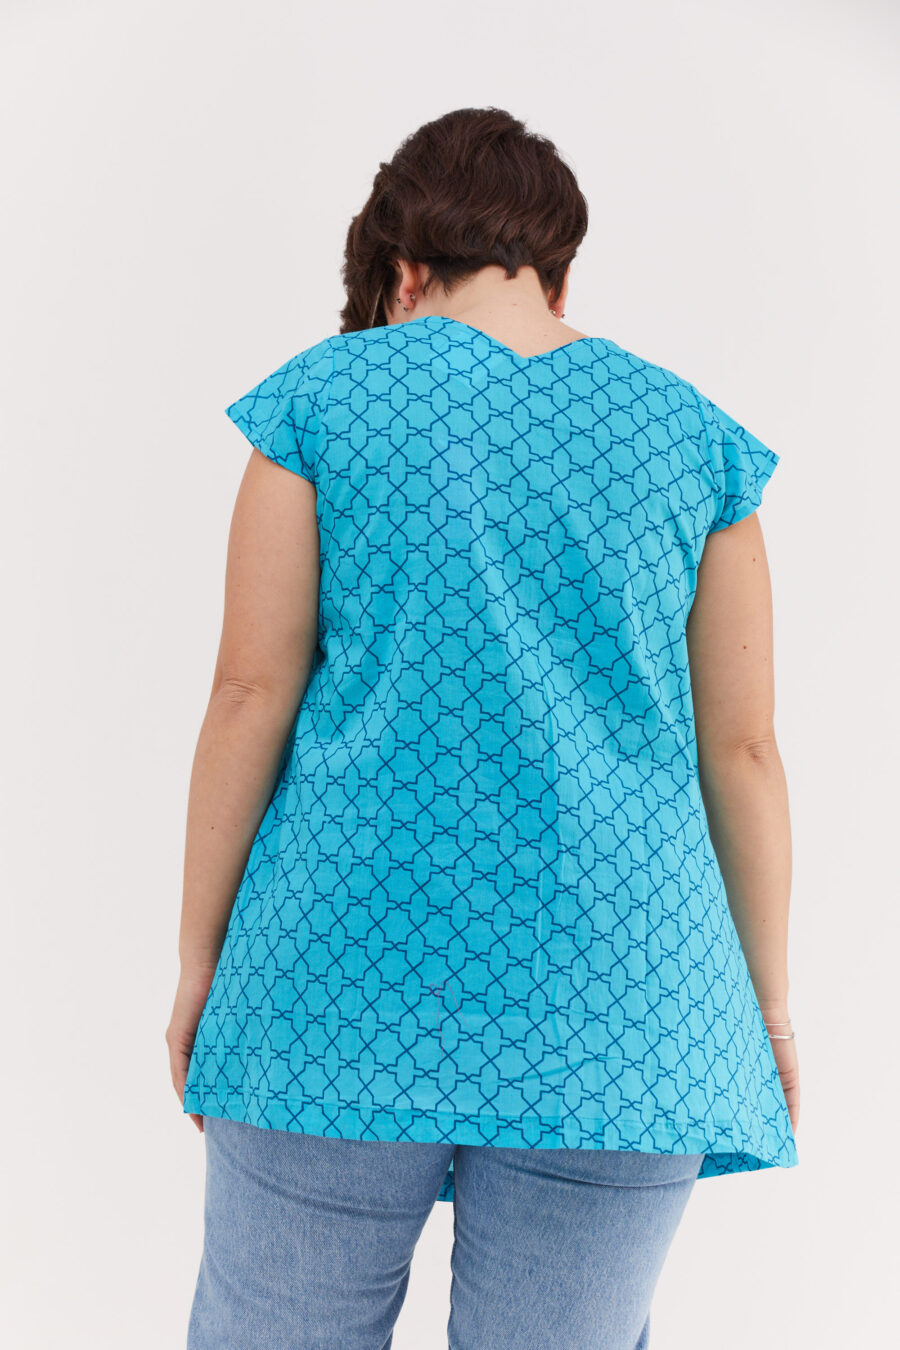 Serena tunic | Uniquely designed black dress – Tourqouise Scandinavian print, tourqouise dress with dark blue geometric print by Comfort Zone Boutique